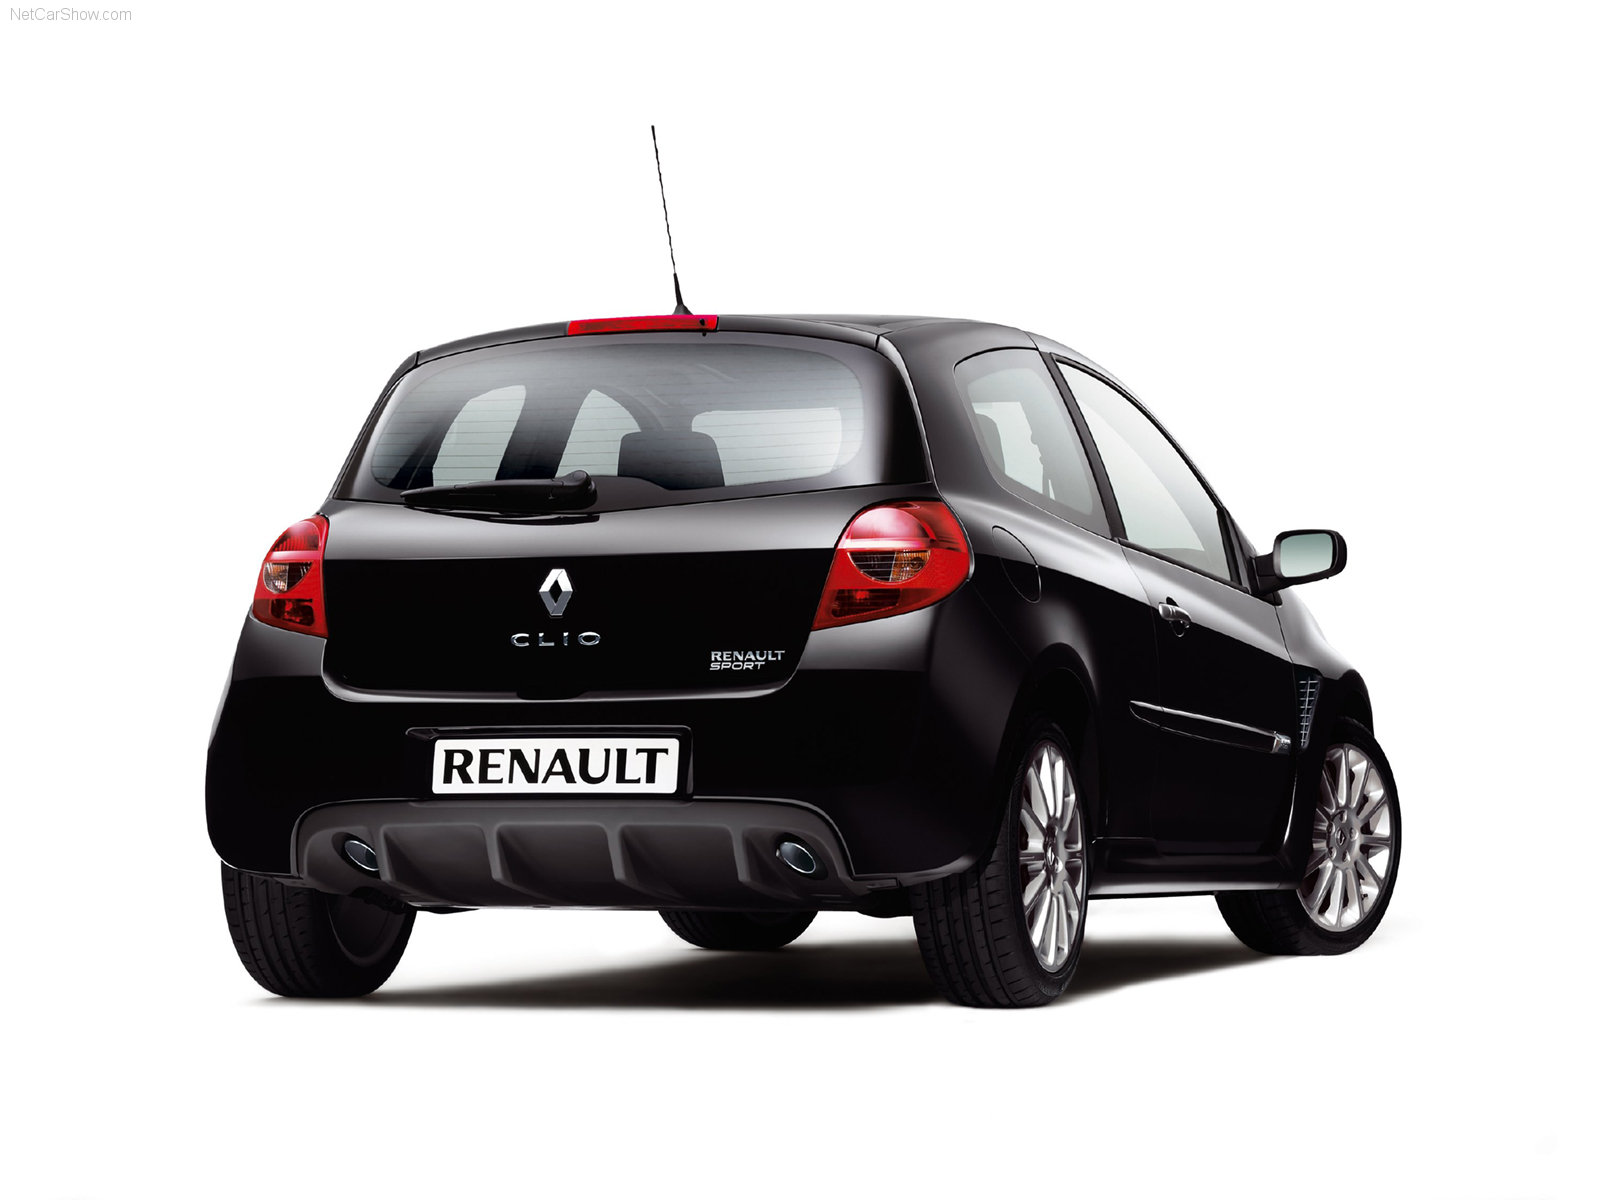 Renault Clio Sport photo 32408